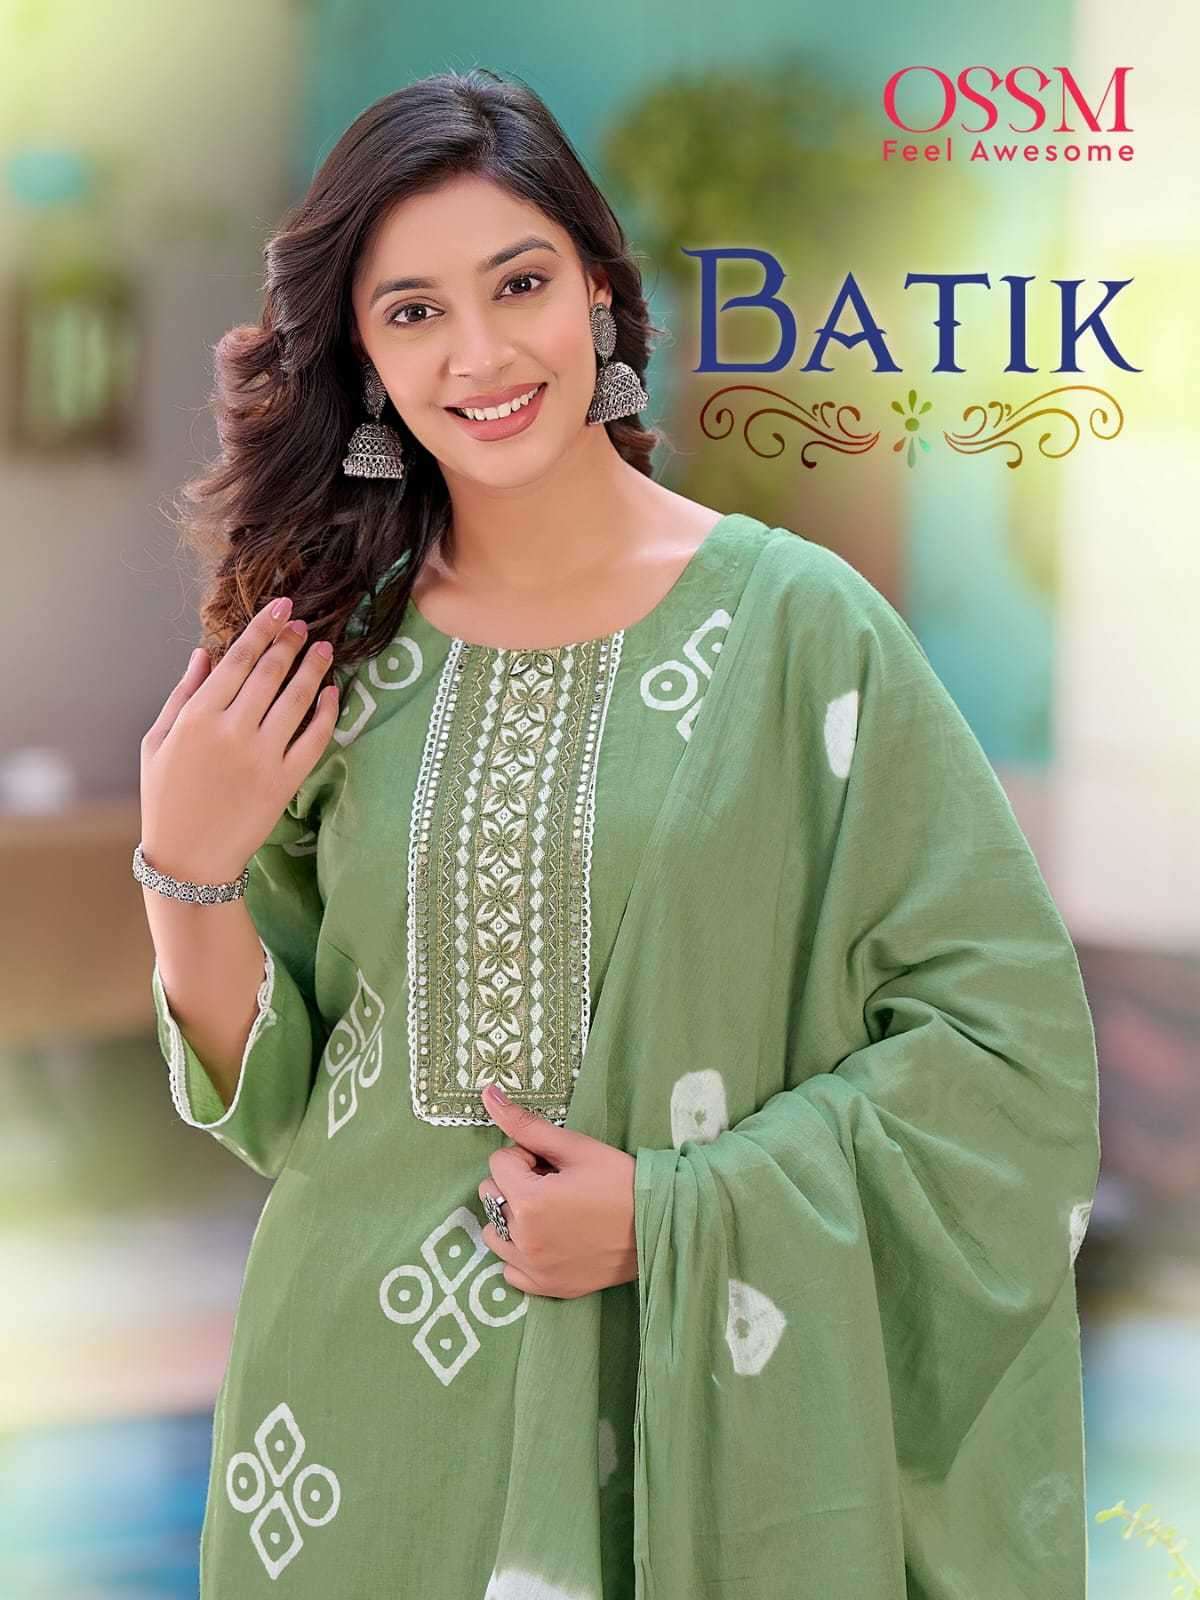 ossm batik series 101-106 Premium Cotton Batik Print readymade suit 